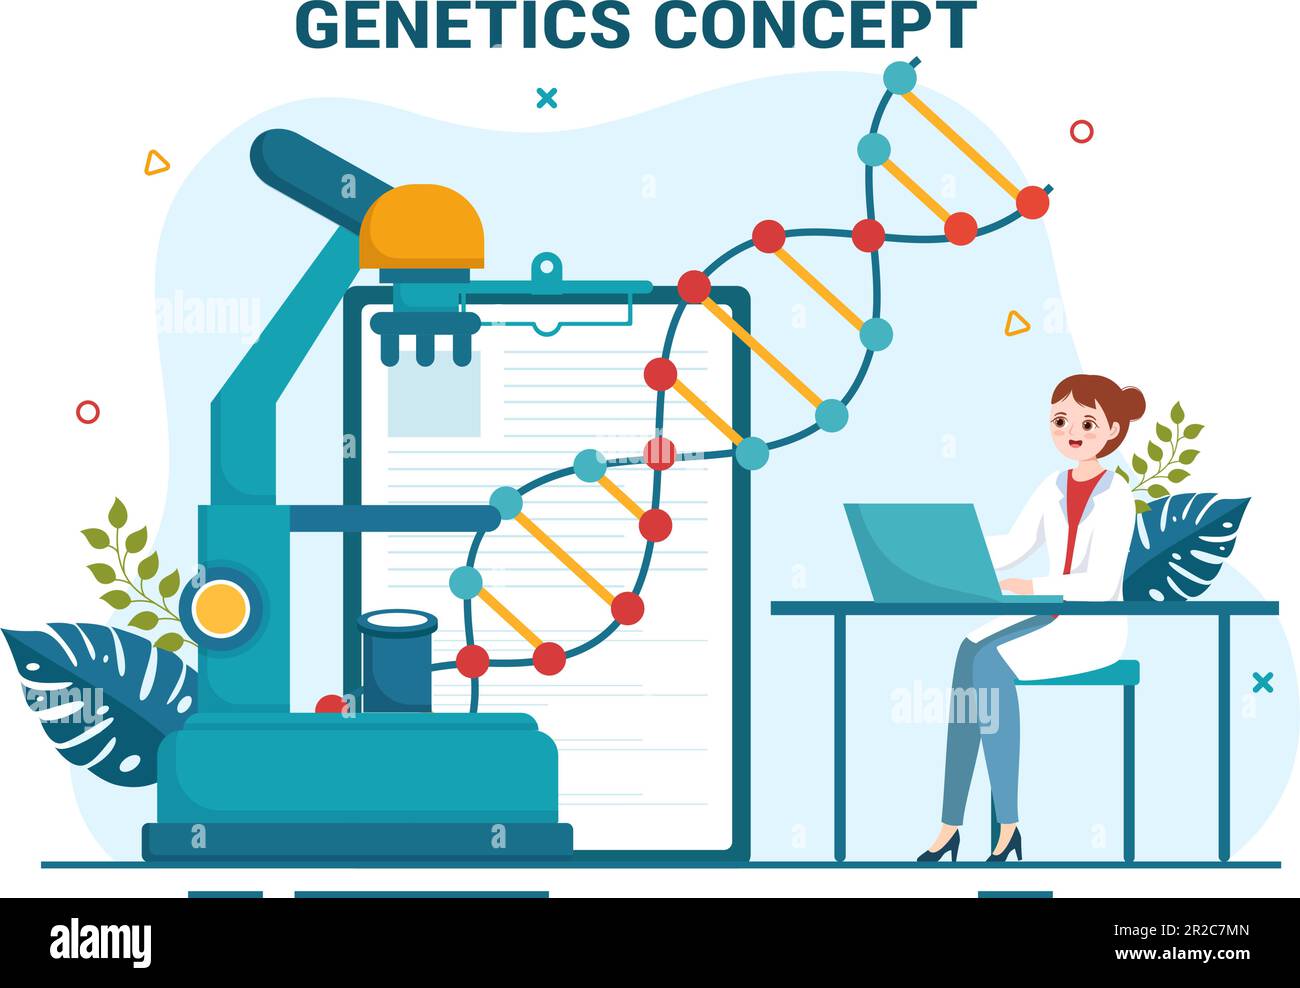 12 Genetic Science Concept Illustration, Genetic